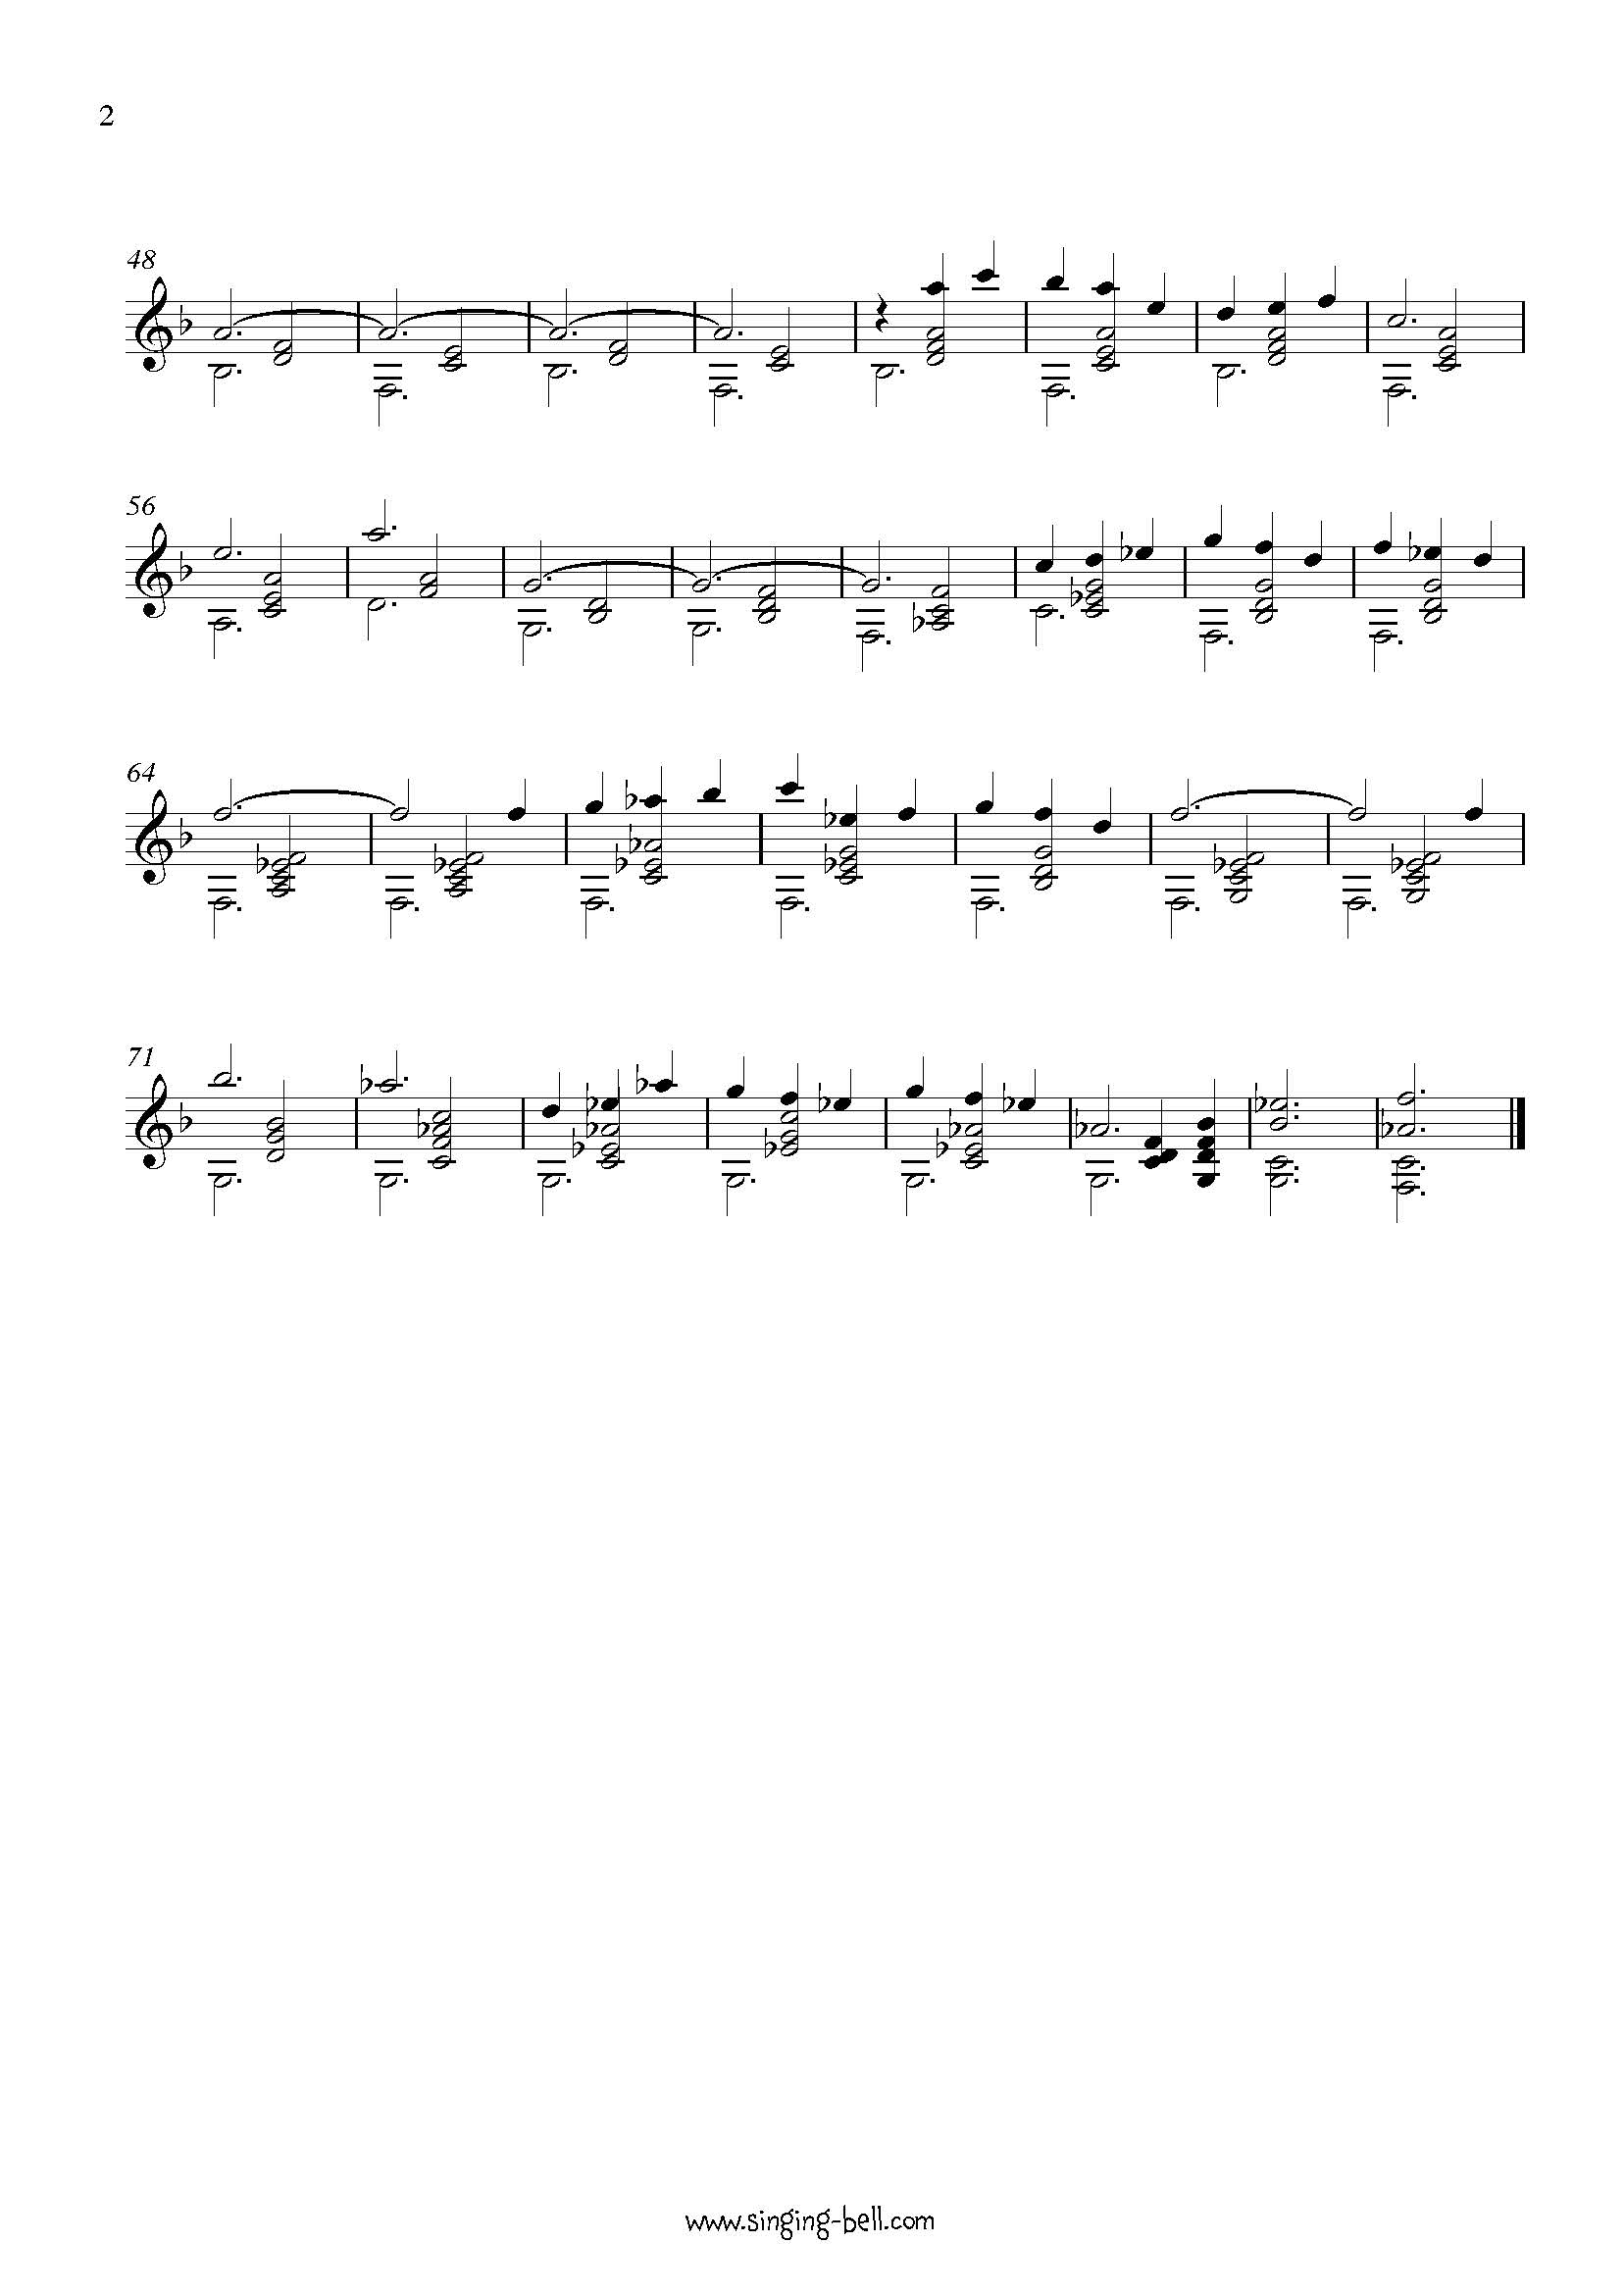 Gymnopedie-vibraphone-sheet-music-singing-bell_Page_2